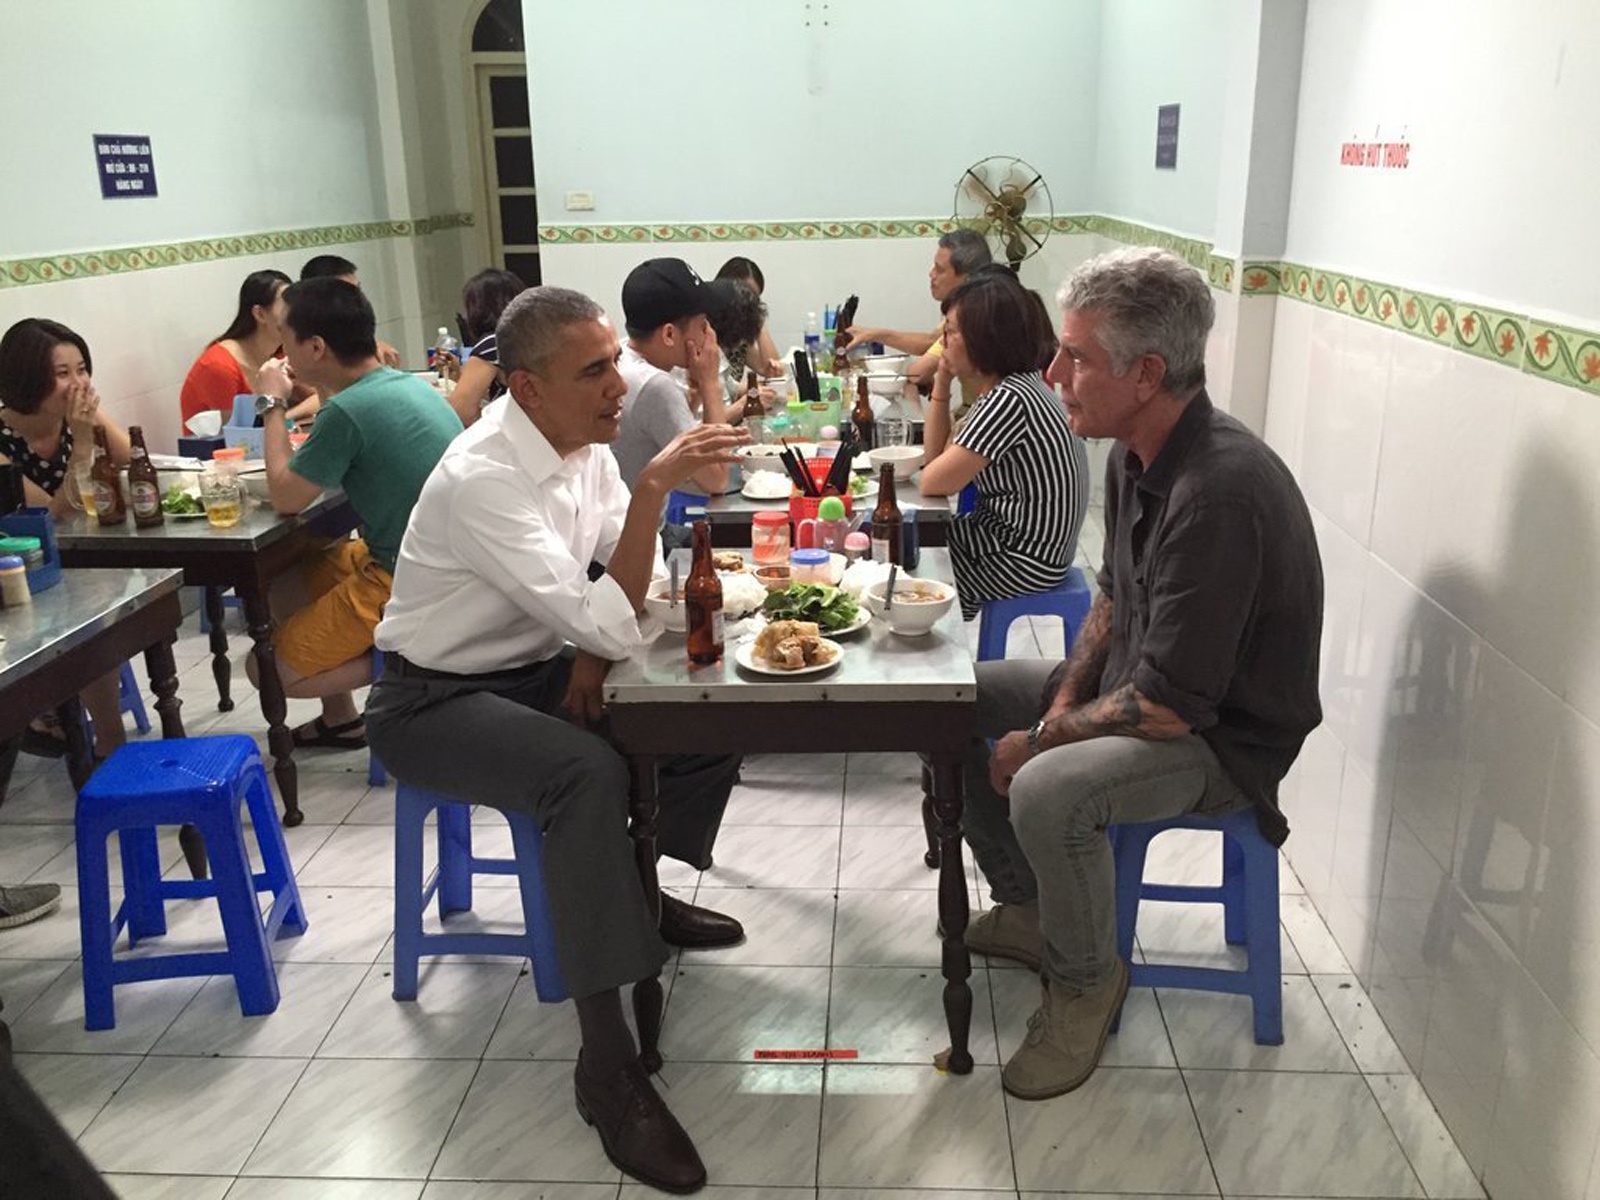 Anthony Bourdain with Barack Obama in Veitnam